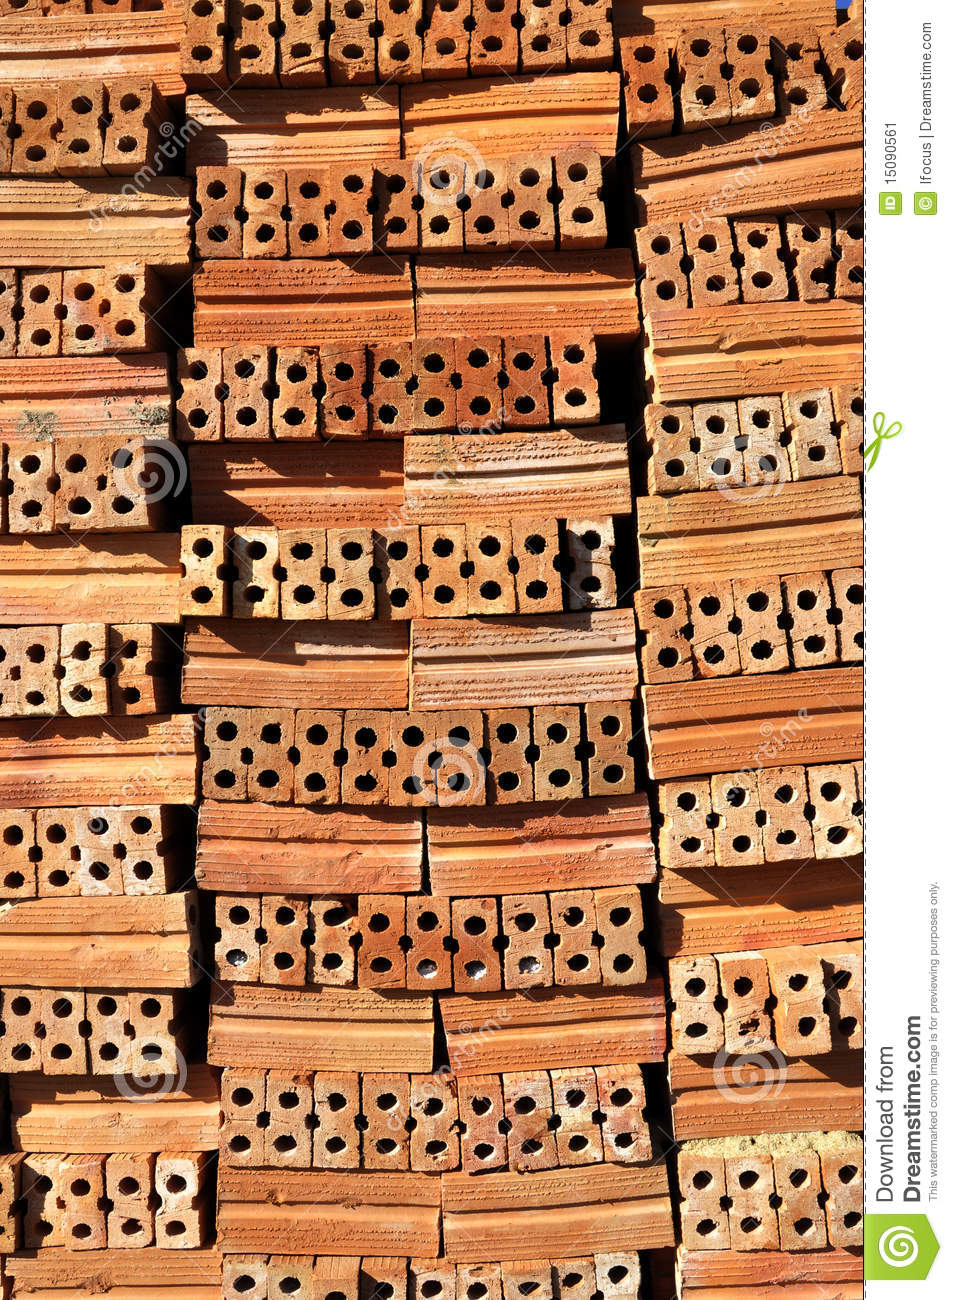 Brick Pile Stock Image   Image  15090561